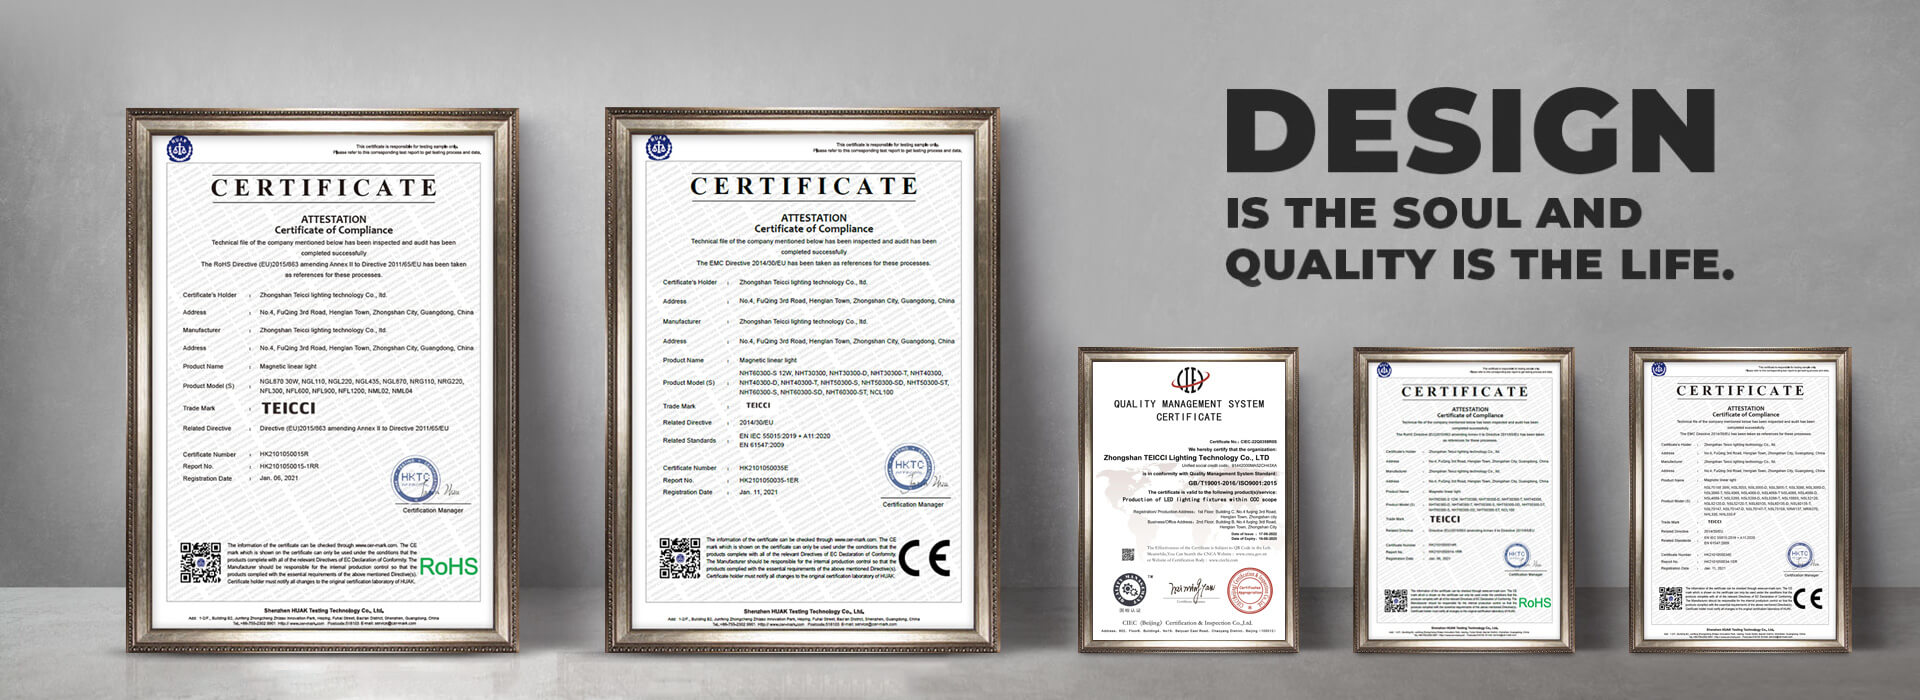 Magnetic Track Light certificate